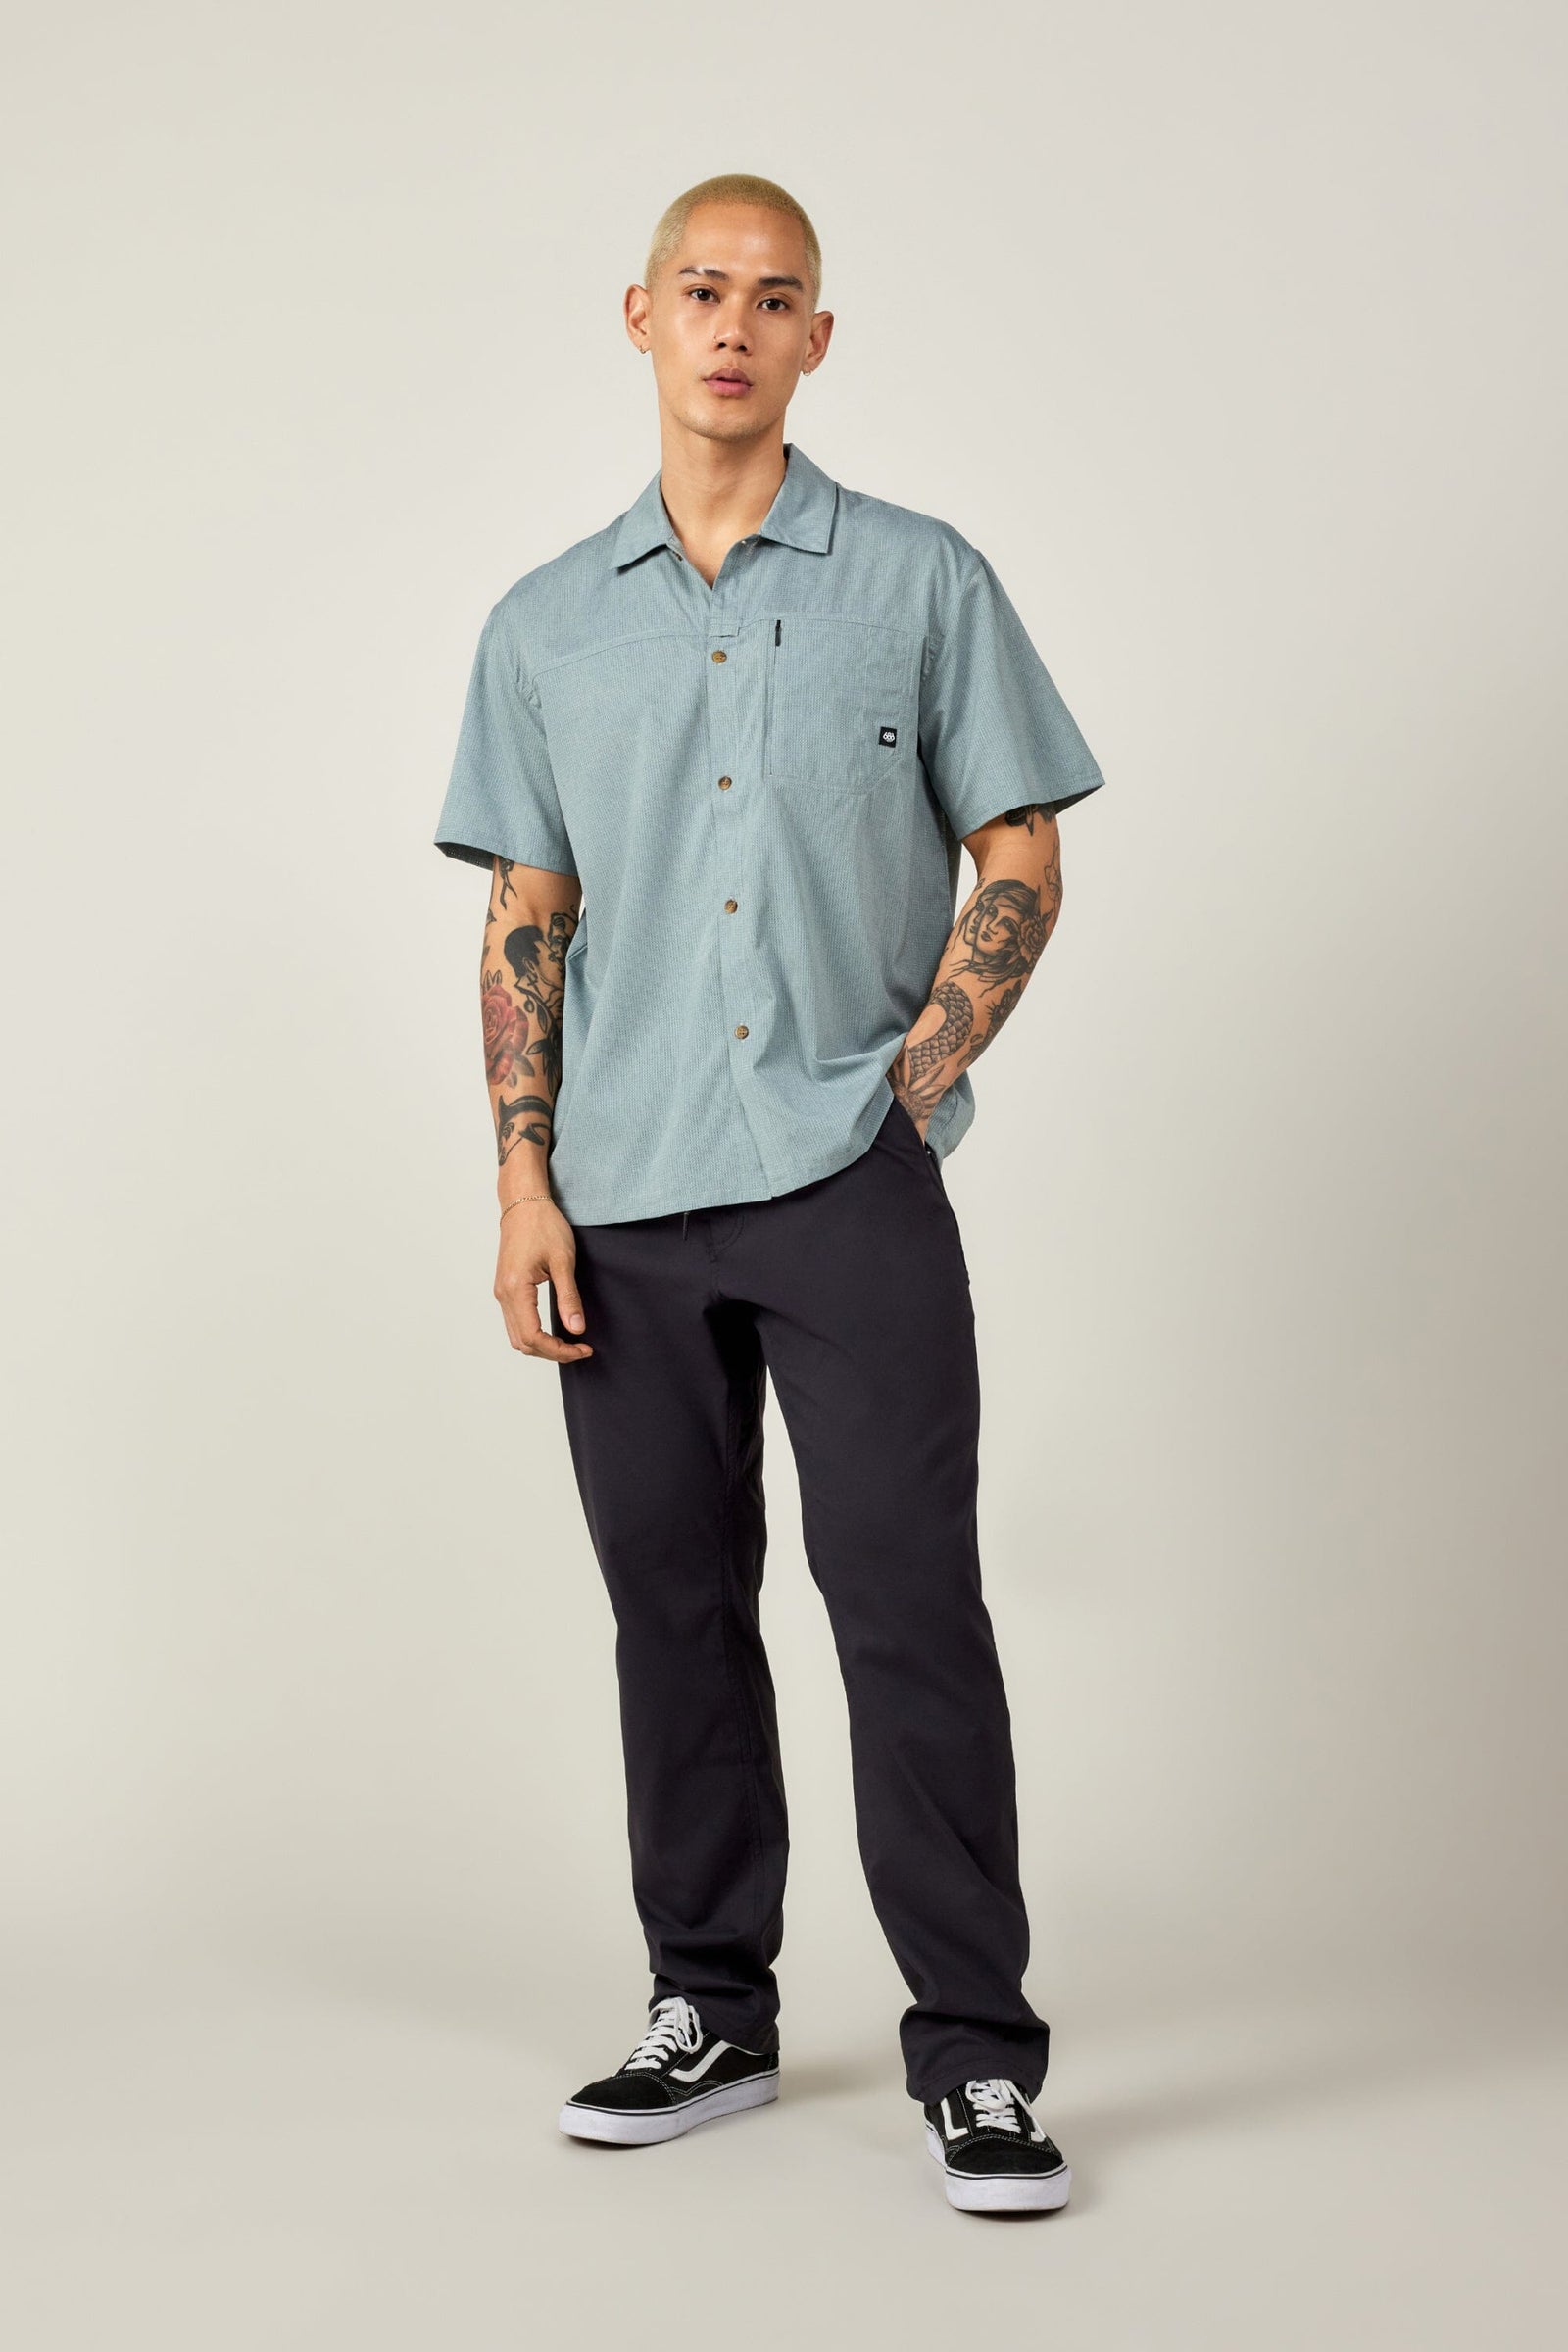 Onia Men's Stretch Linen Roll-Tab Sport Shirt - ShopStyle